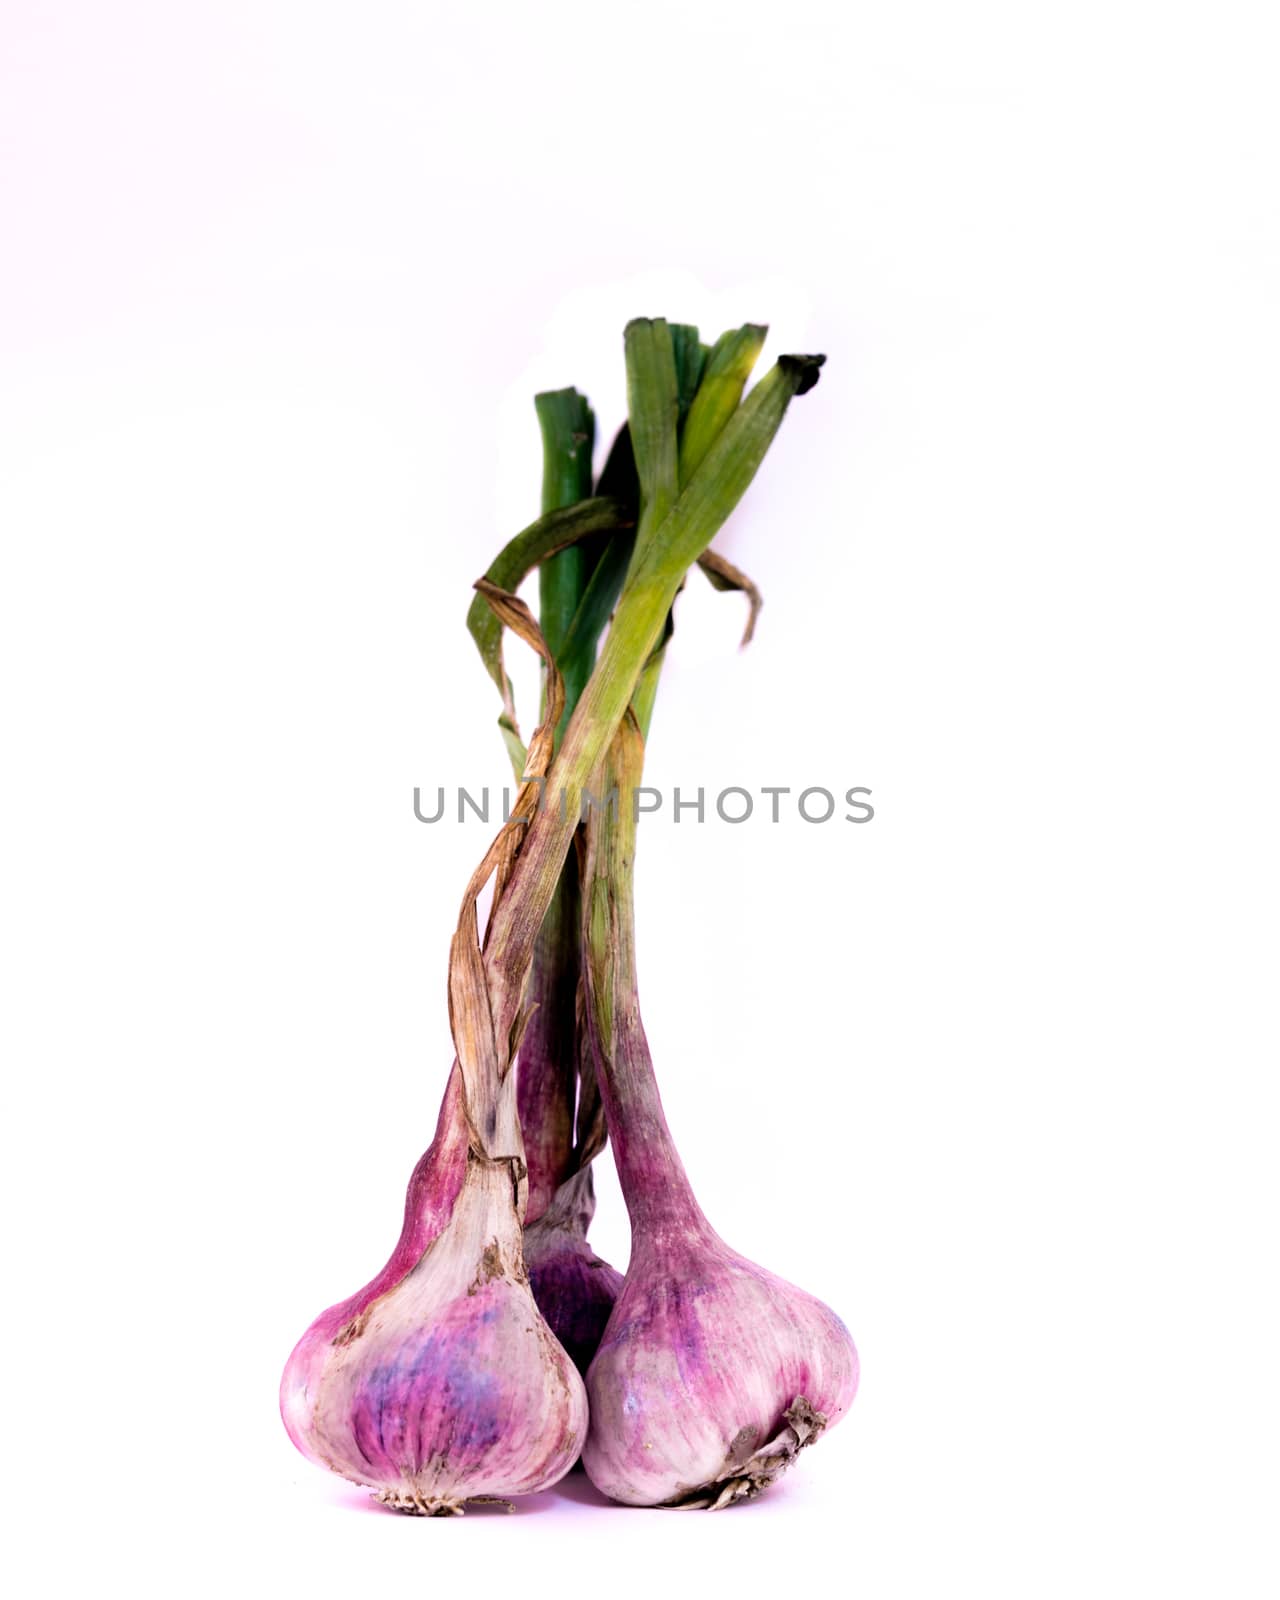 Fresh organic garlic bulbs by trongnguyen